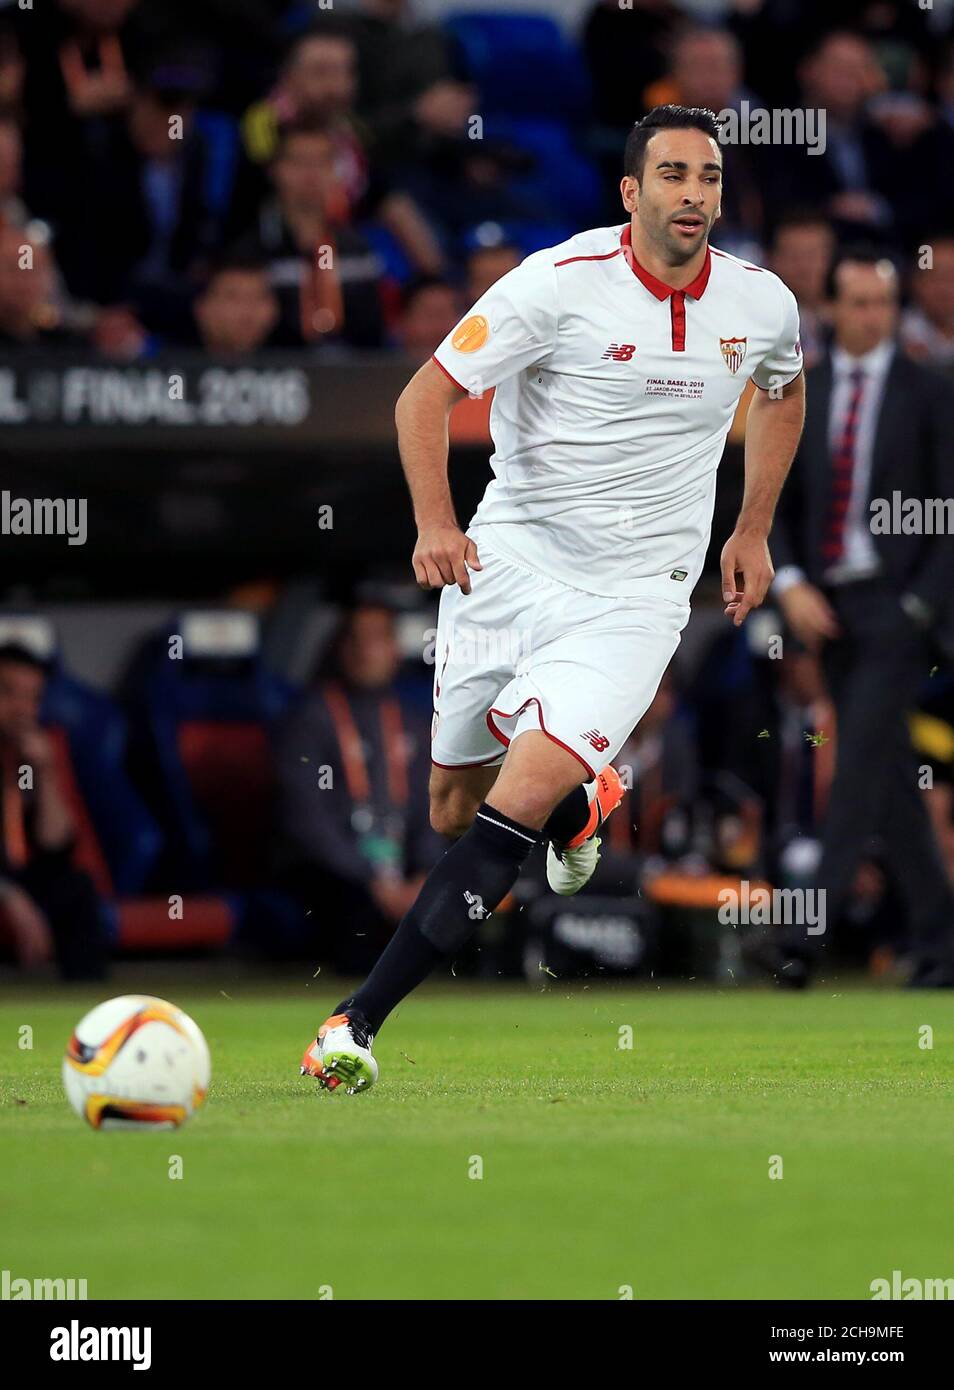 Sevilla's Adil Rami during the match at St. Jakob-Park, Basel, Switzerland  Stock Photo - Alamy